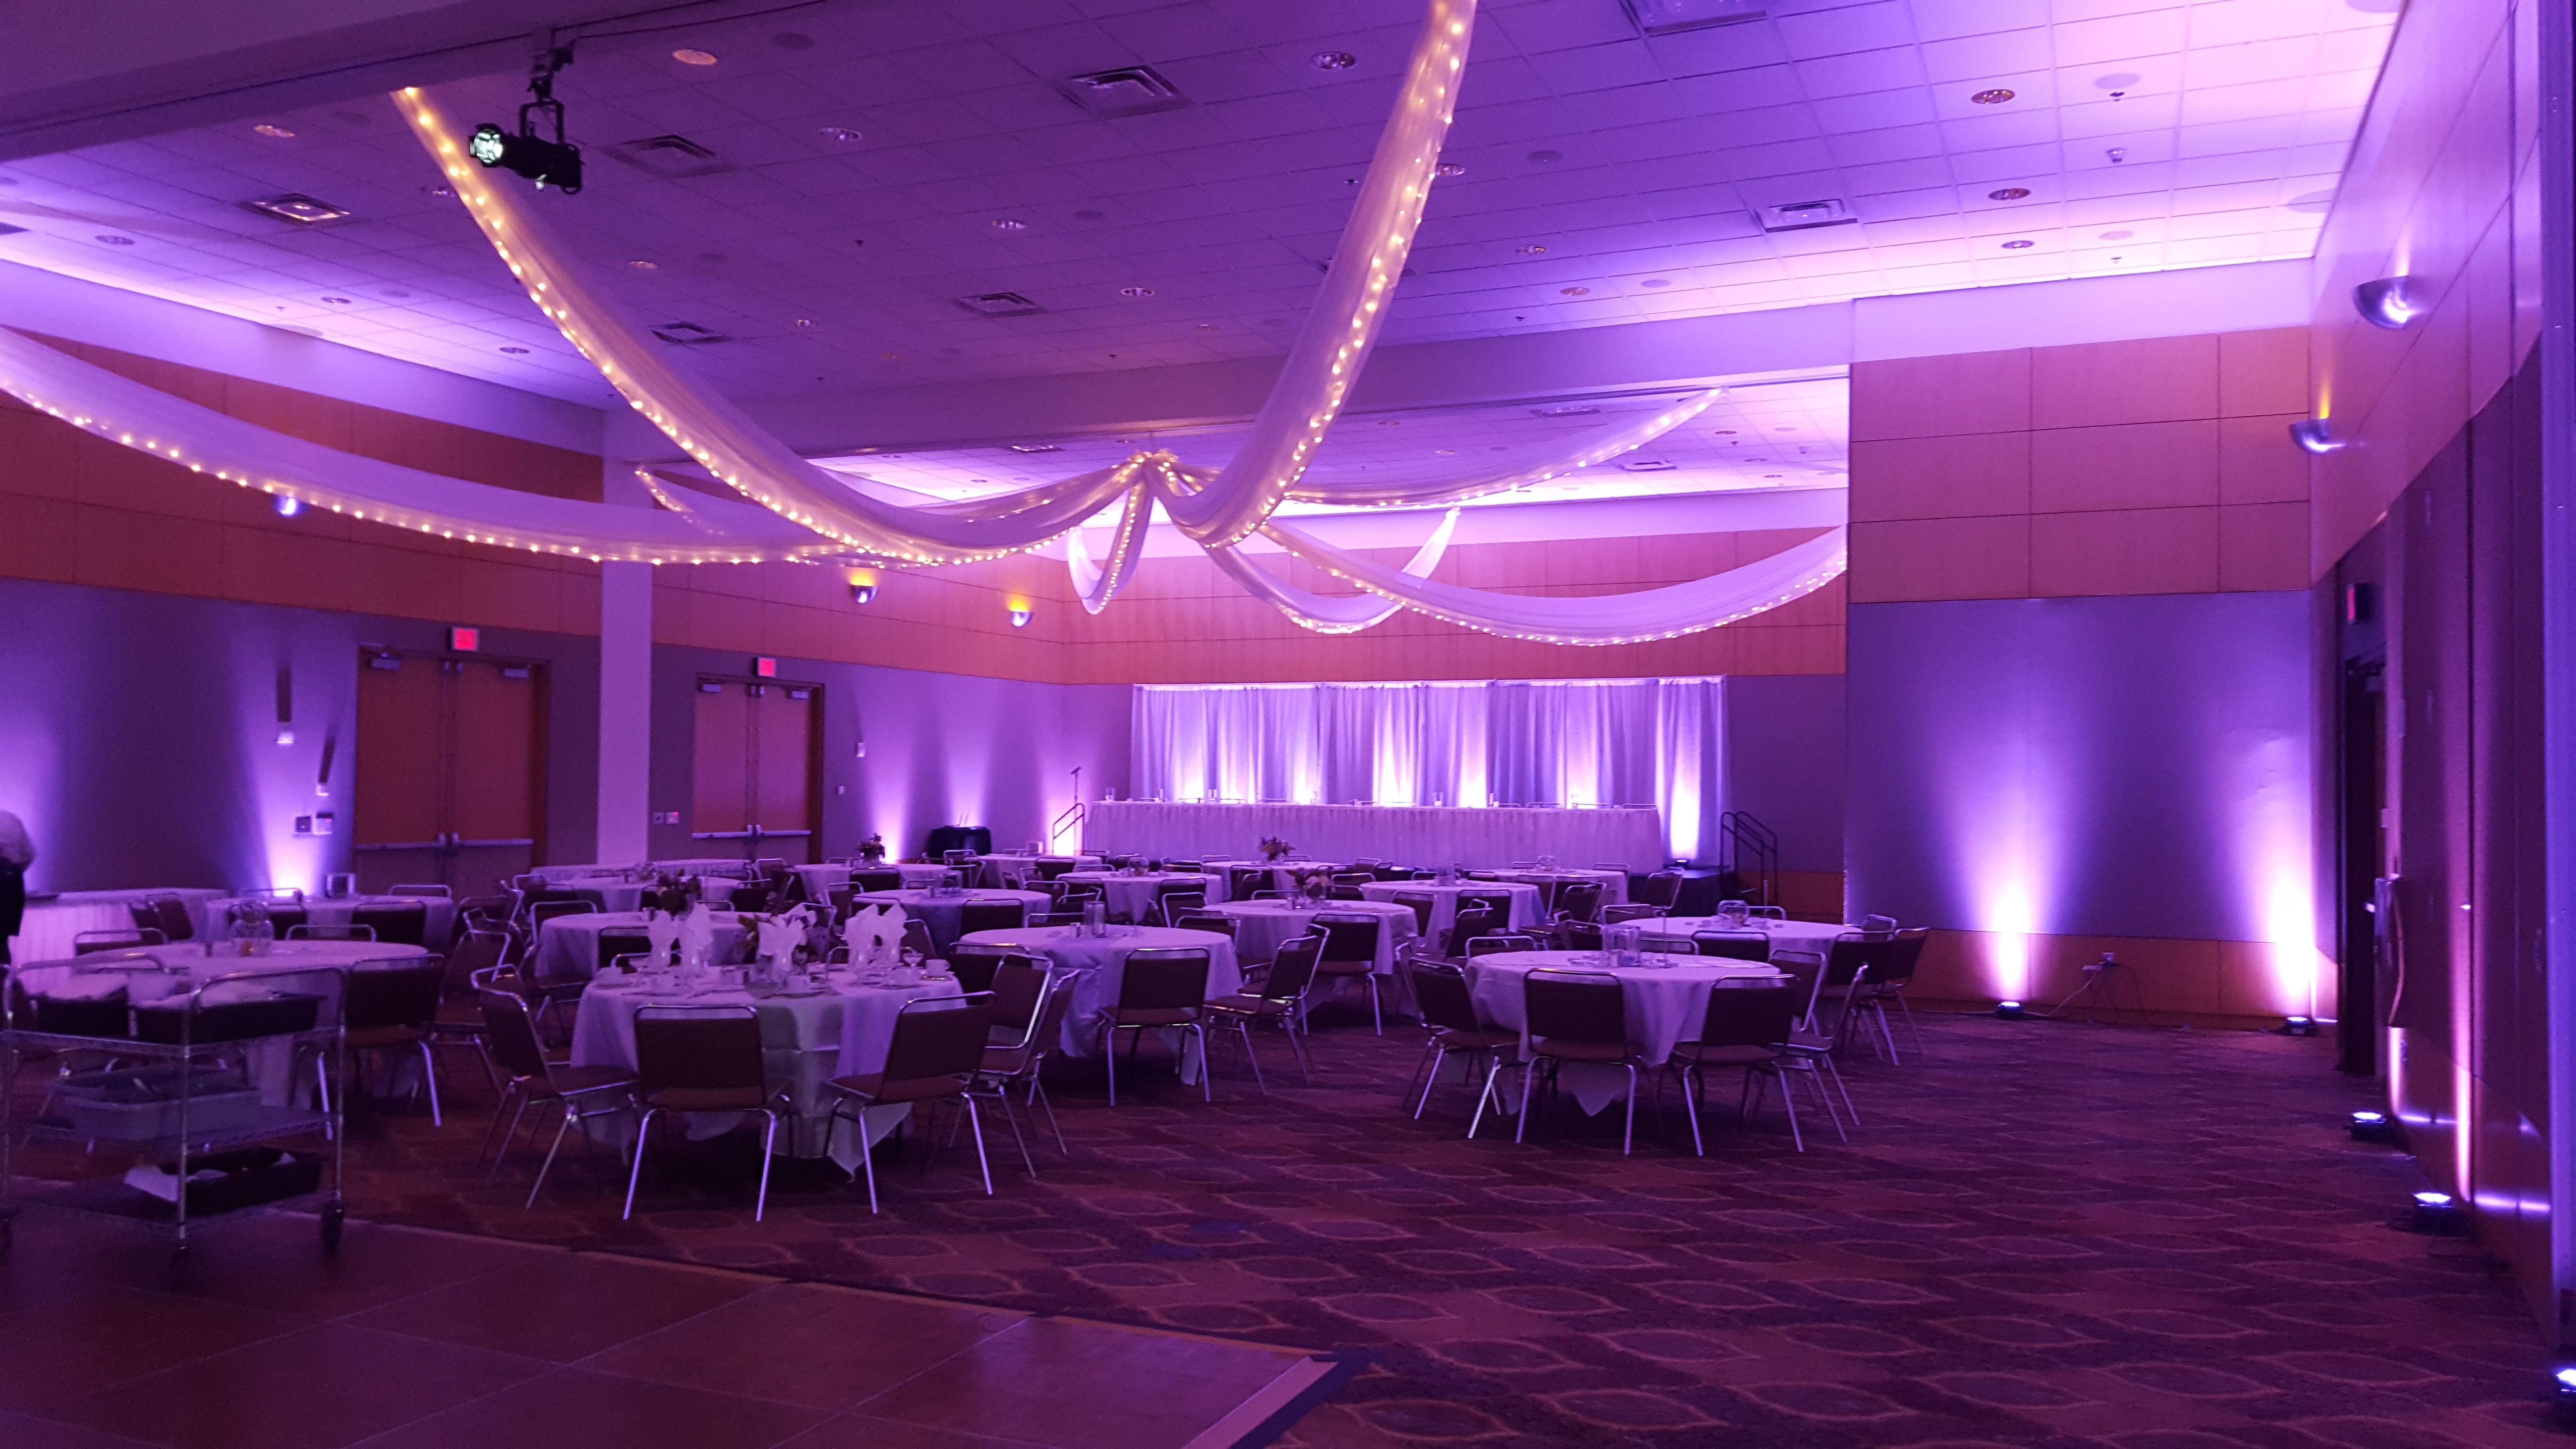 DECC, Horizon room.
Wedding lighting in purple.